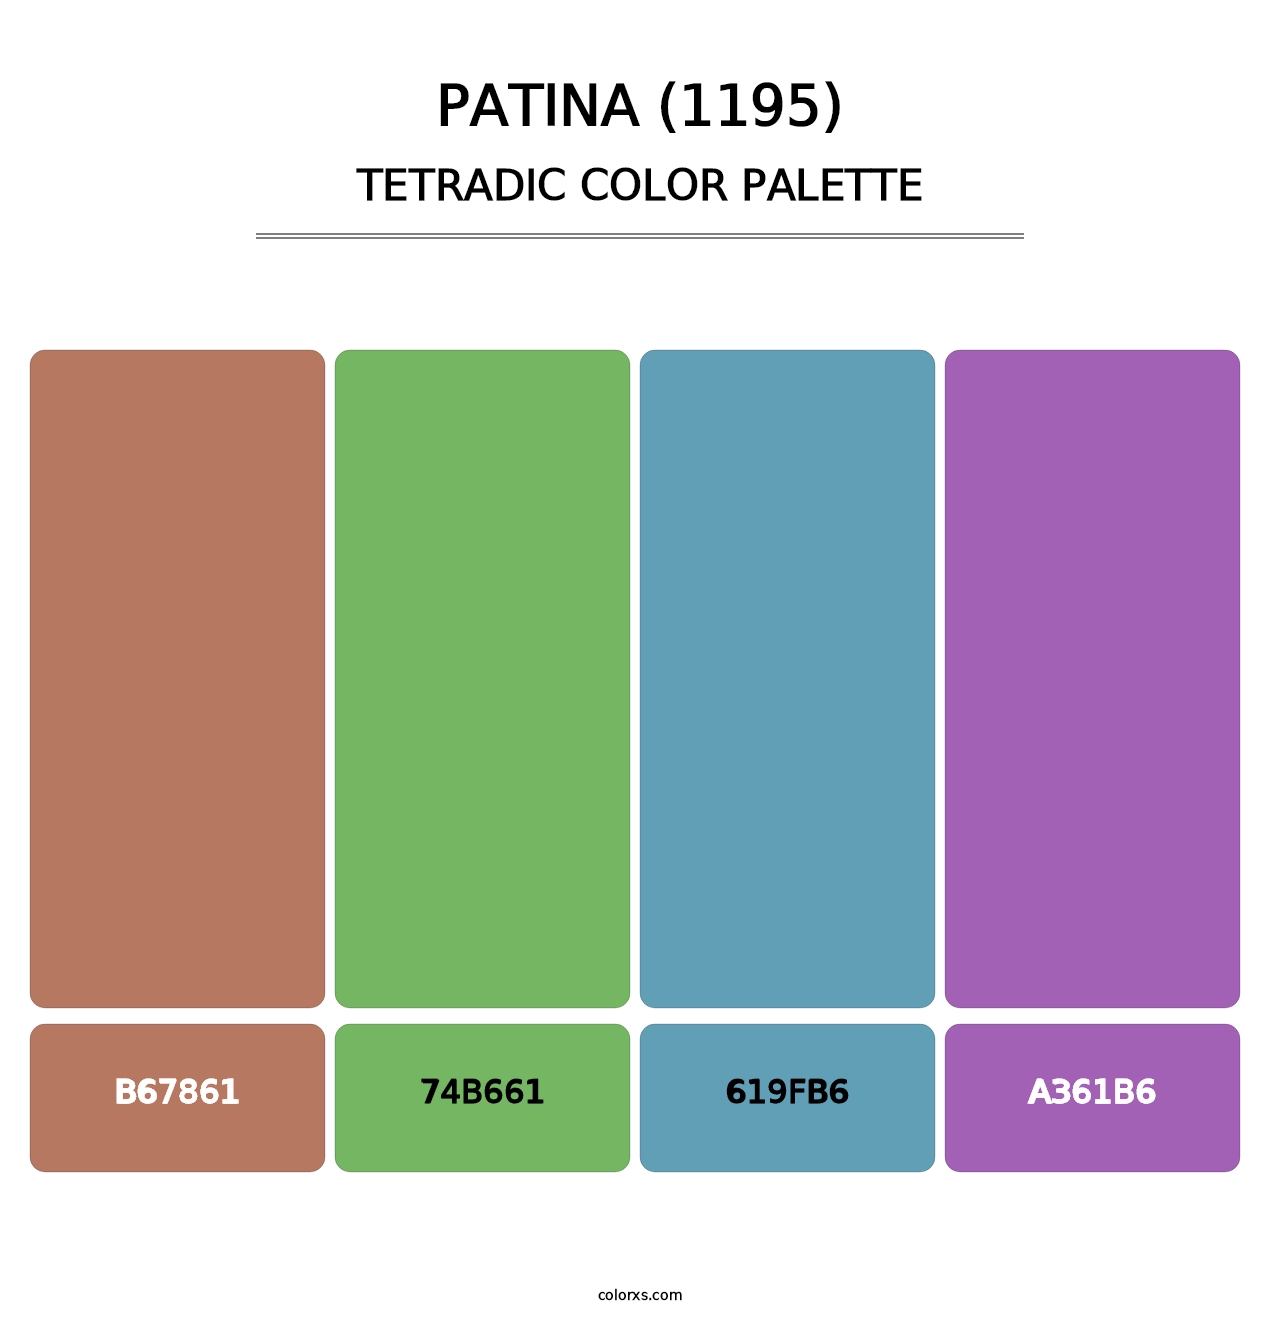 Patina (1195) - Tetradic Color Palette